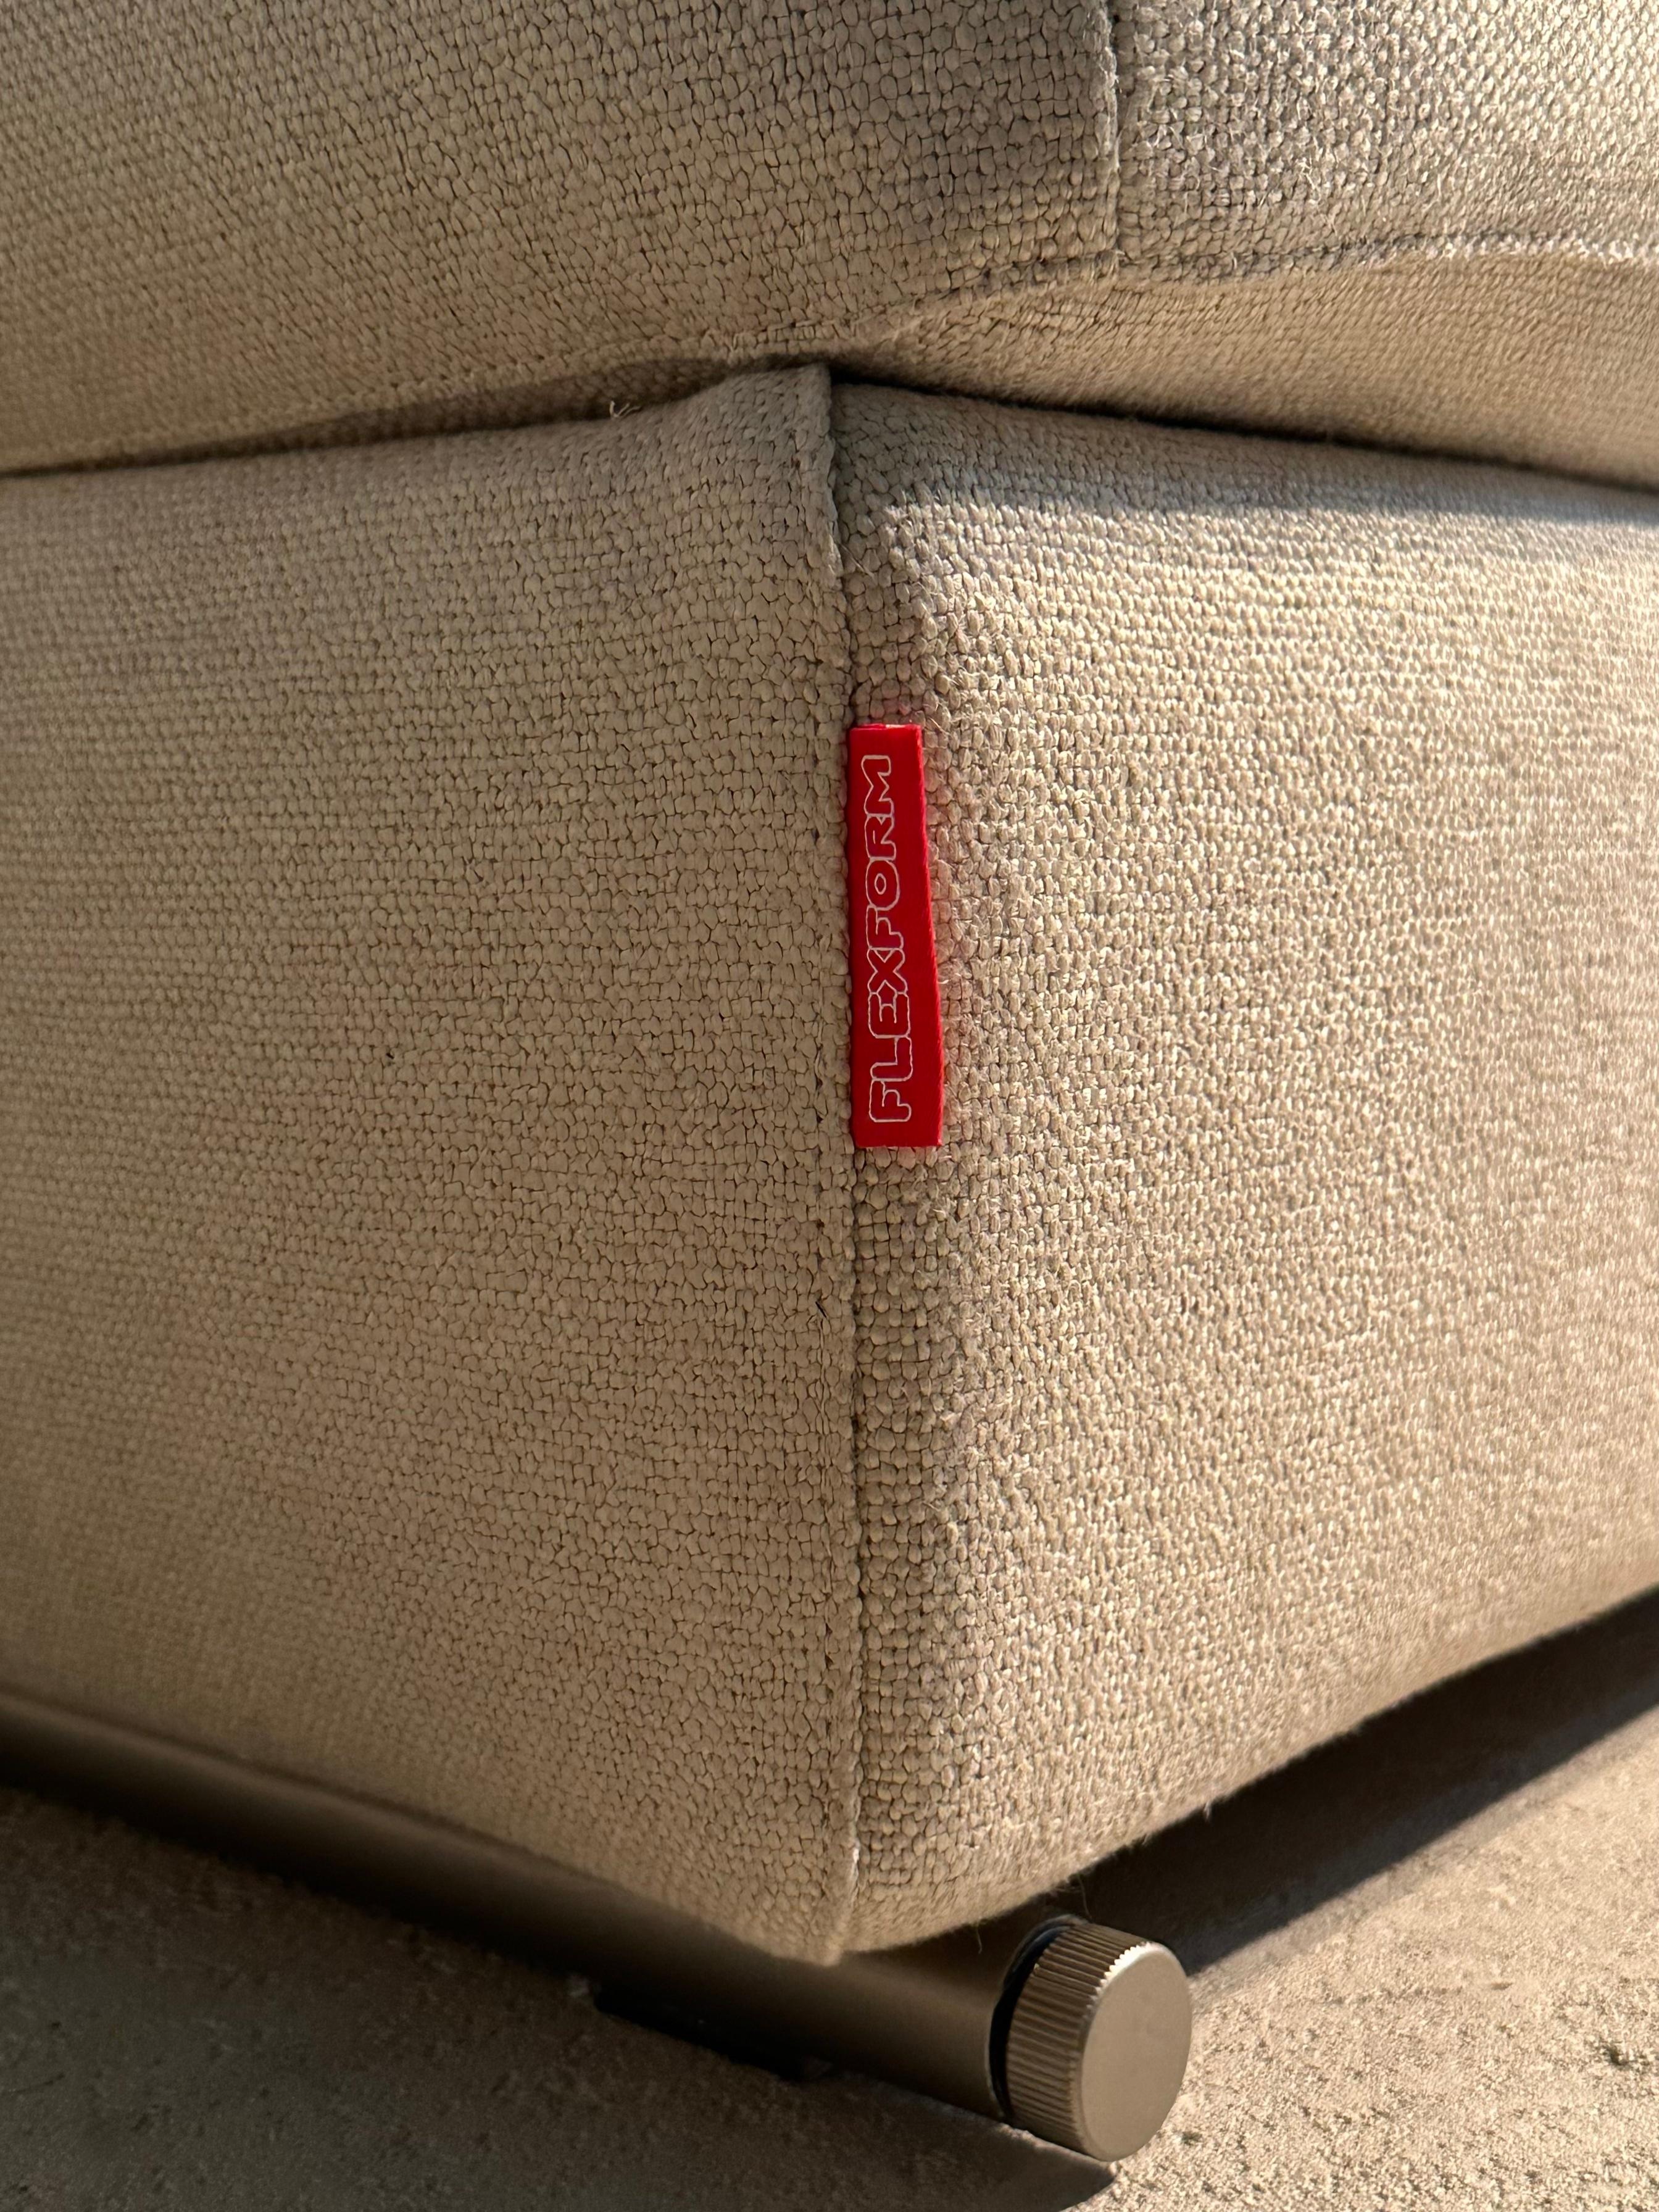 Groundpiece Sable Sofa by Flexform For Sale 9